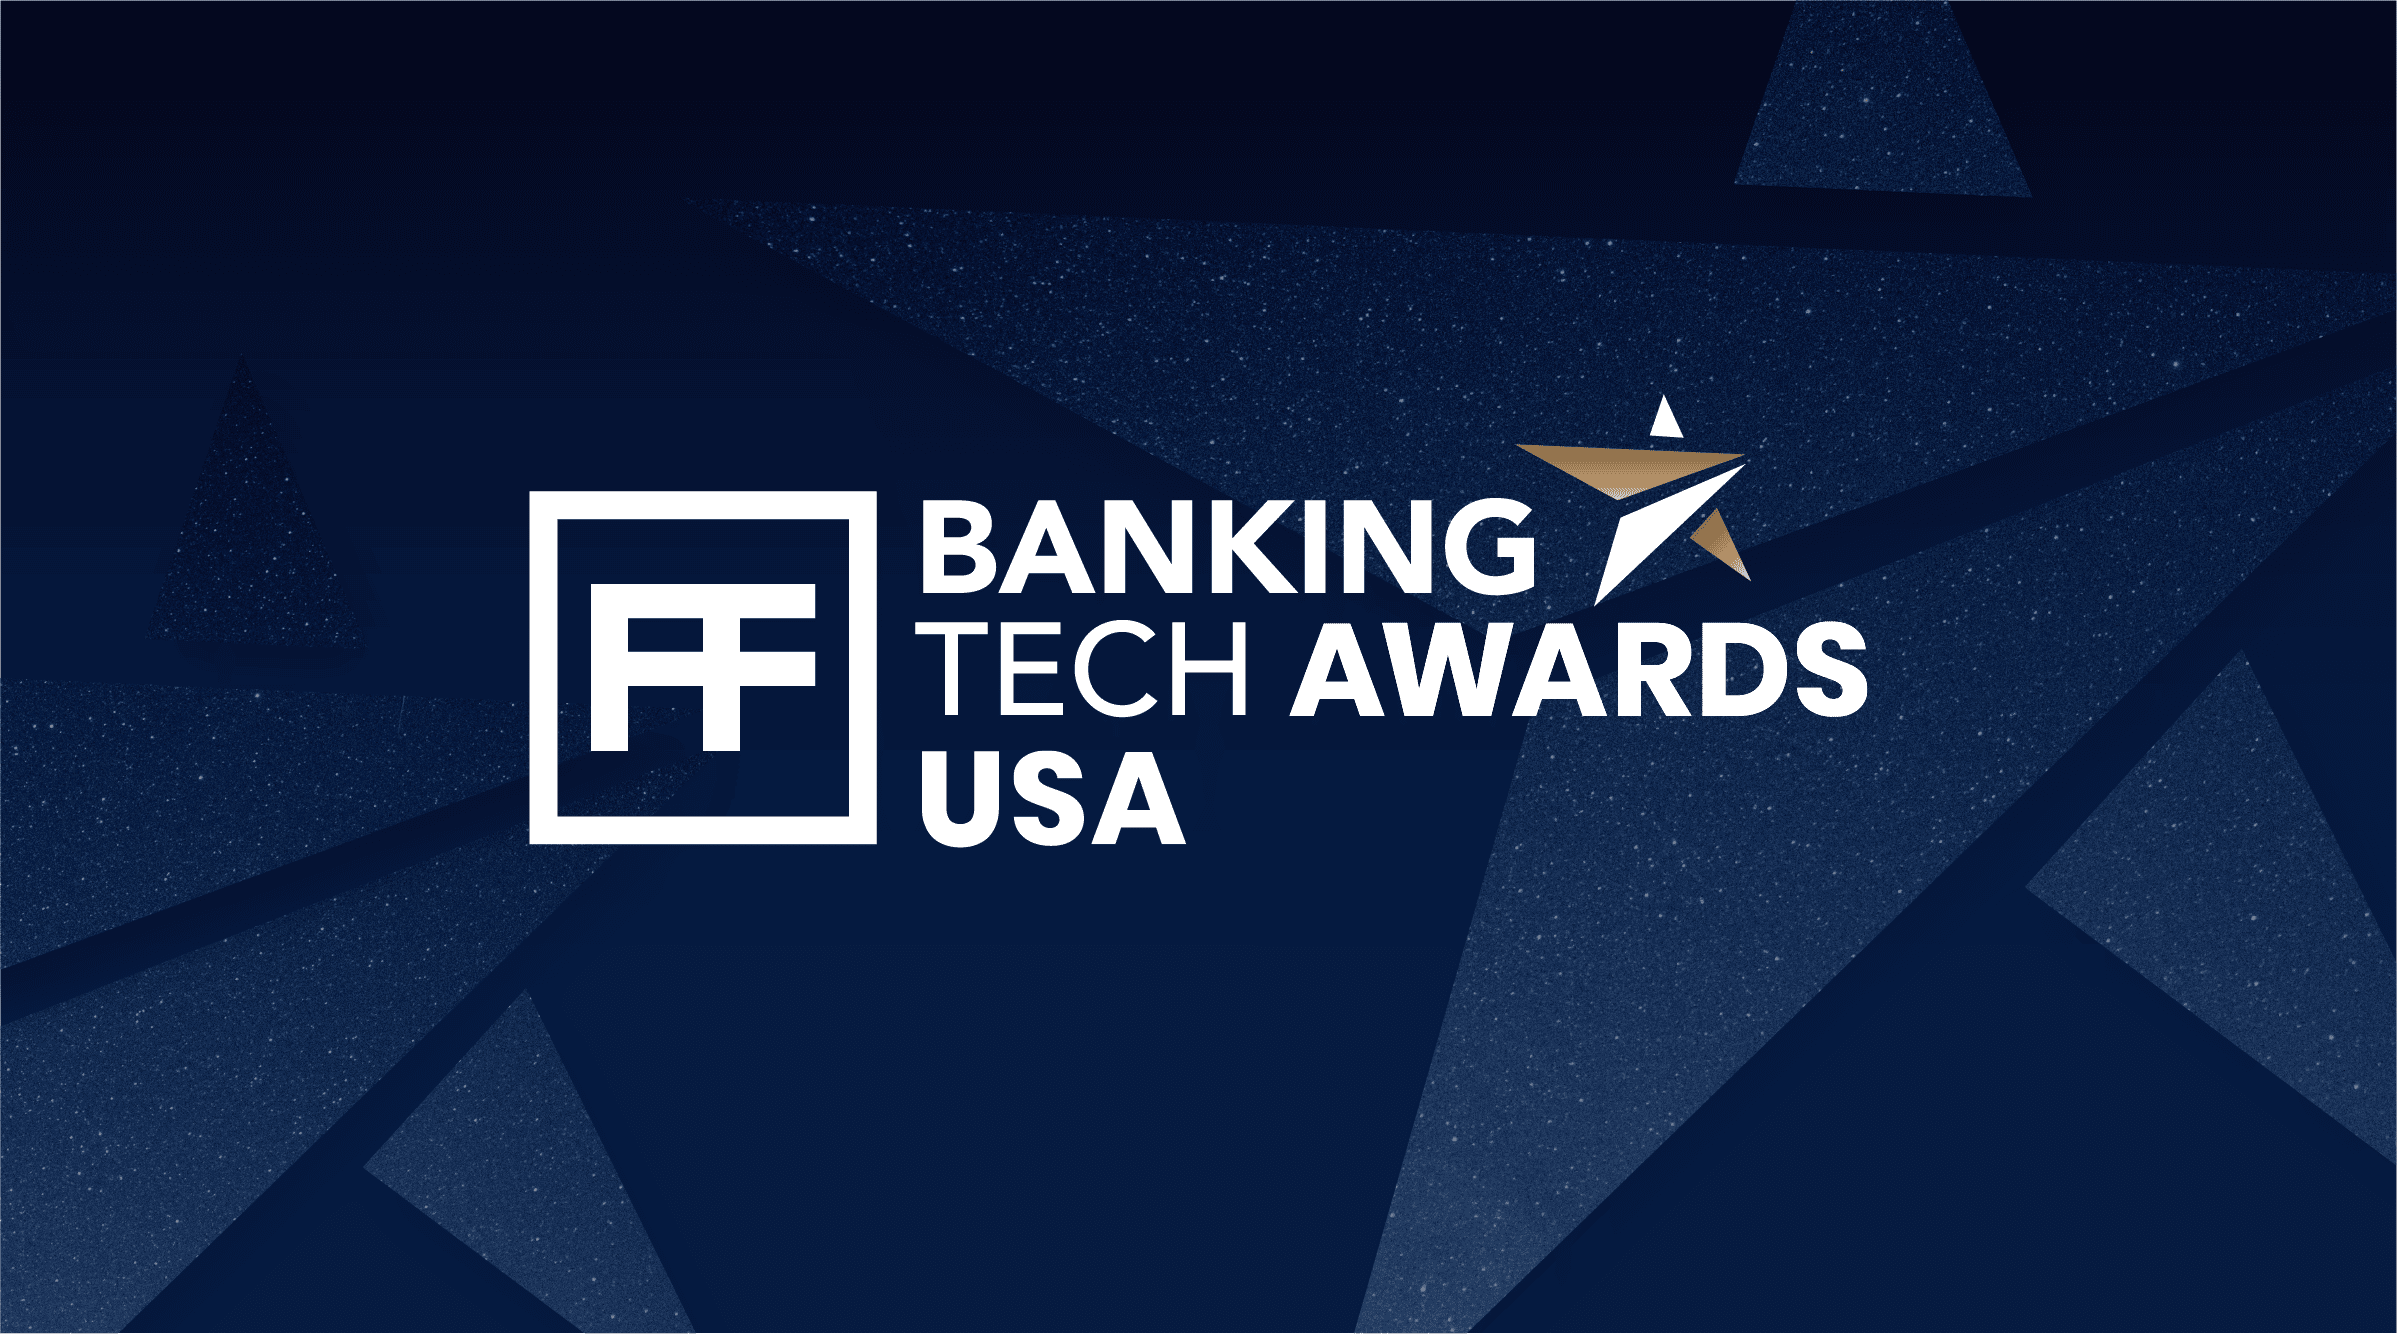 Featured image for “Member Student Lending LLC and LendKey Technologies Partnership Wins 2022 Fintech Futures Banking Tech Award”